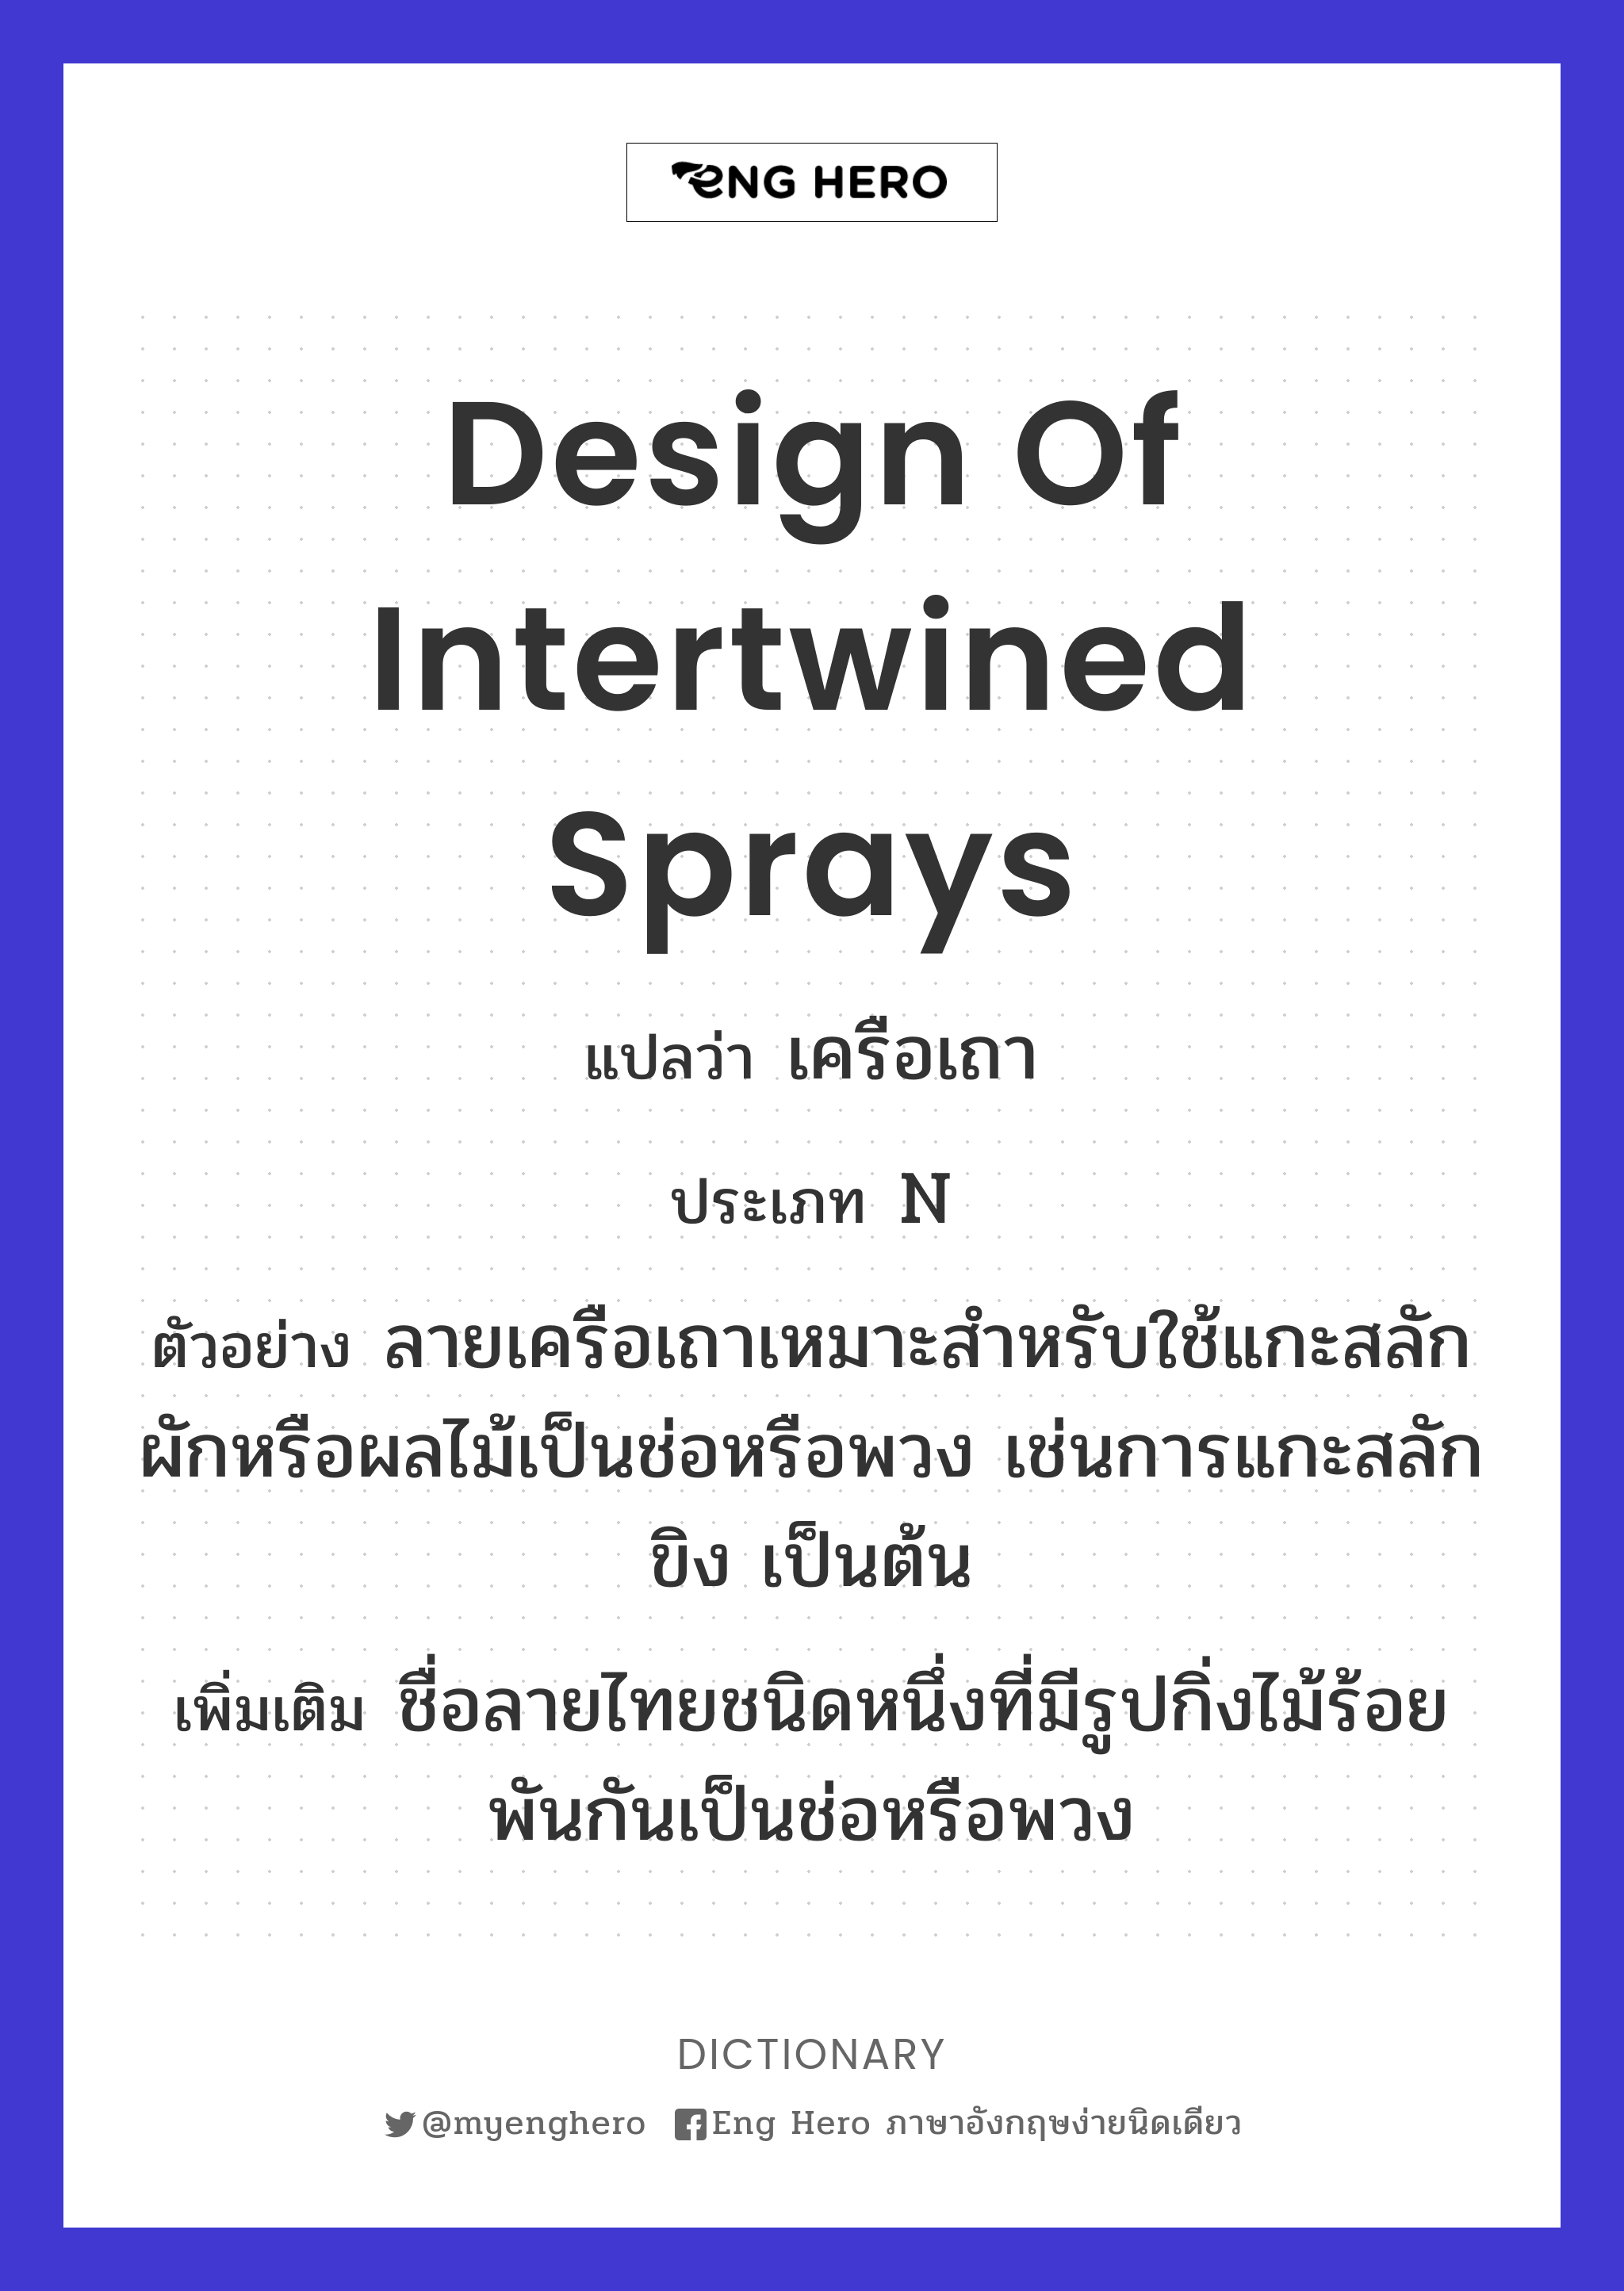 design of intertwined sprays